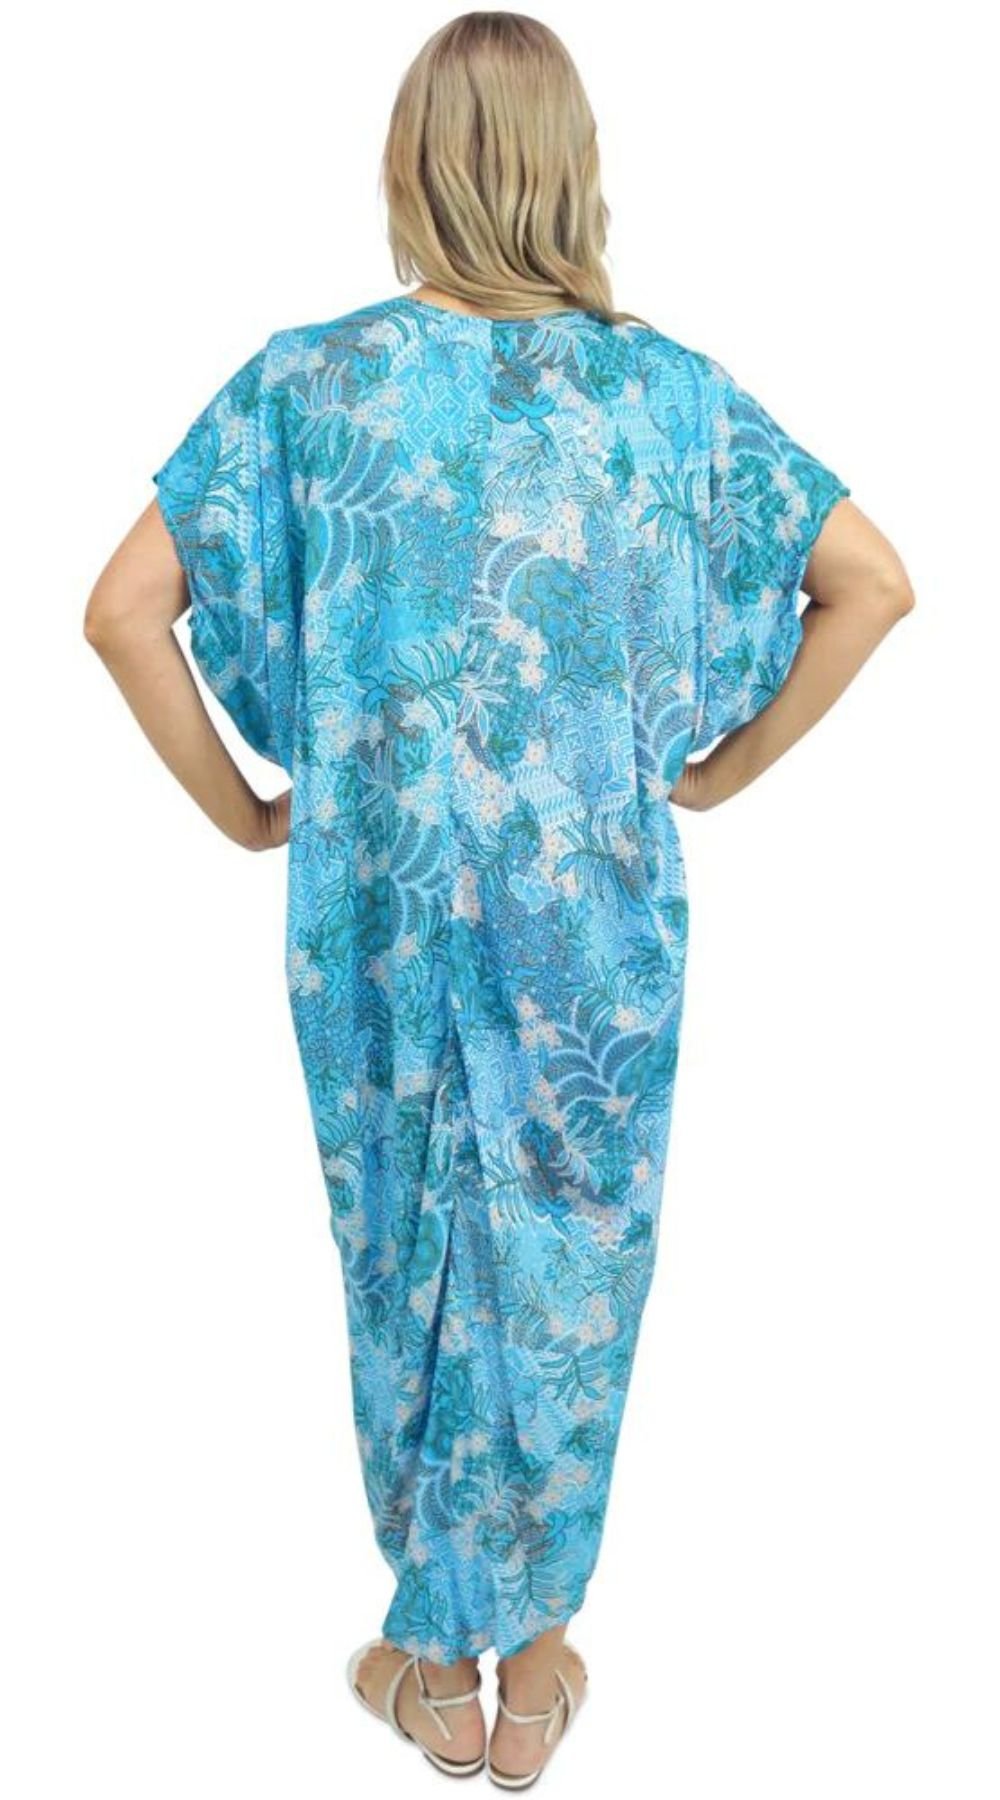 Frilled Toga Dress Paisley Batik (Sky Blue) - Bare Essentials
Long dress